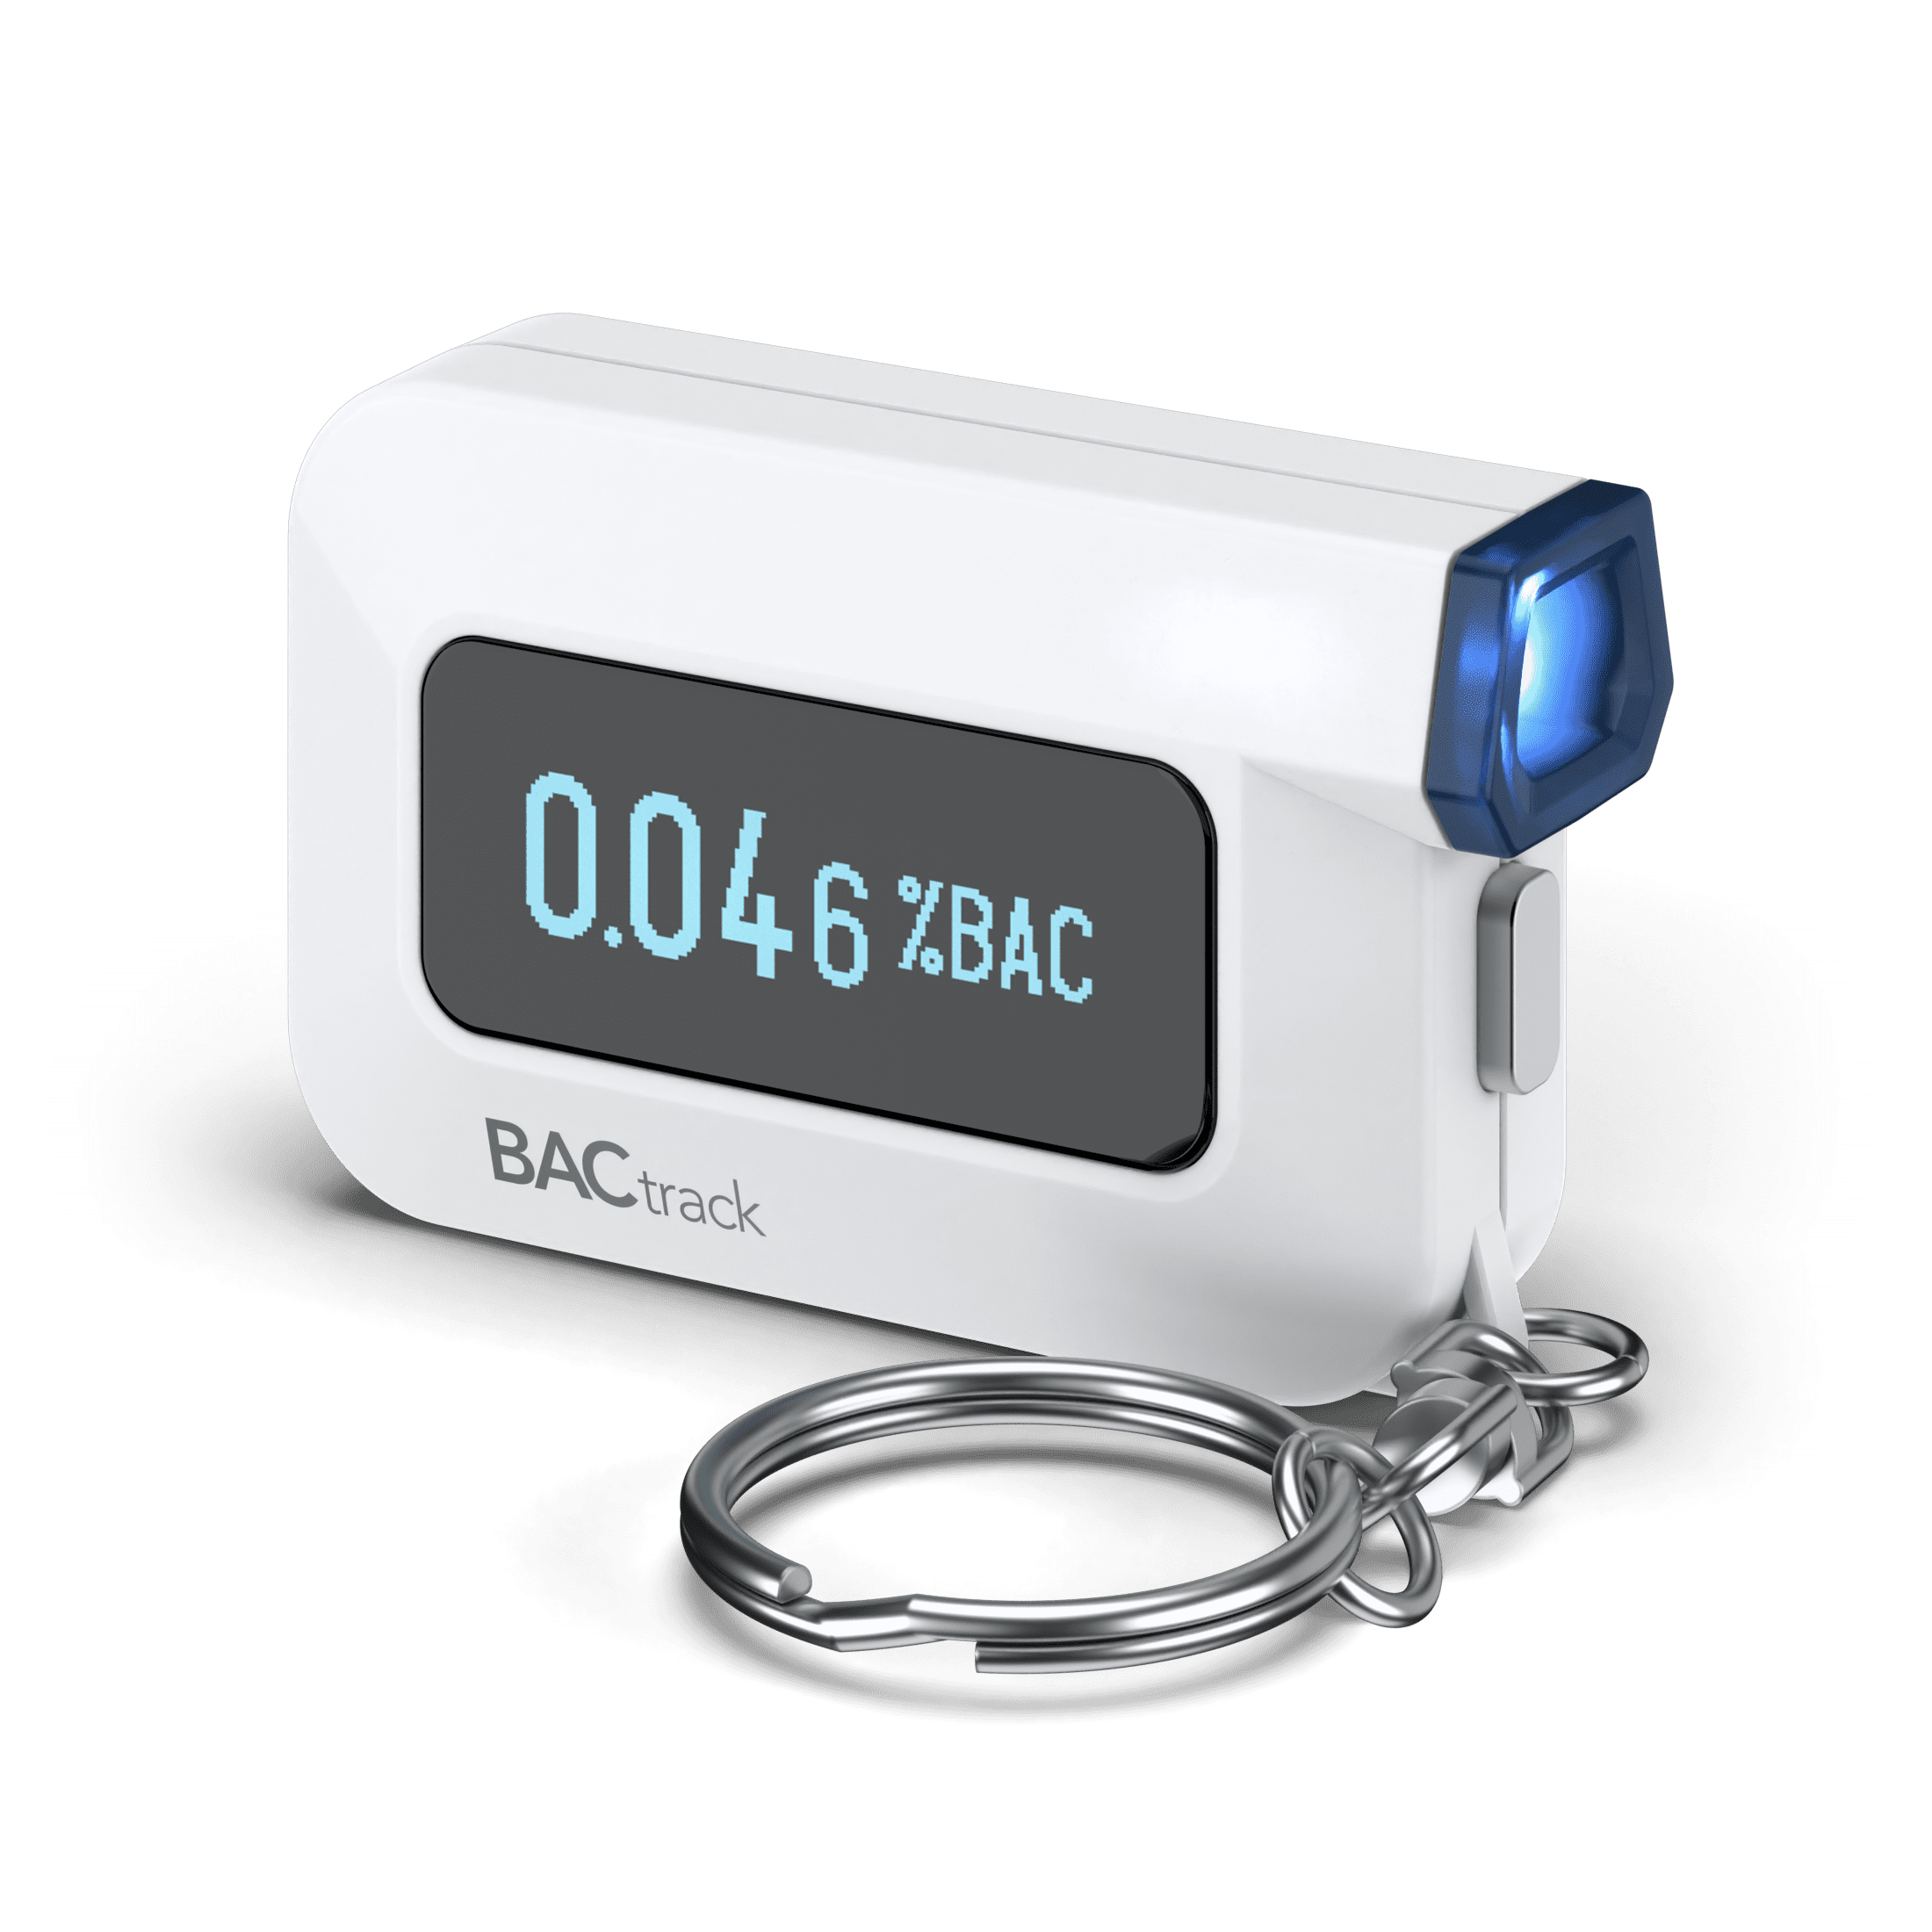 Easy@Home Breathalyzer, Professional-Grade Portable Fuel Cell Breath A